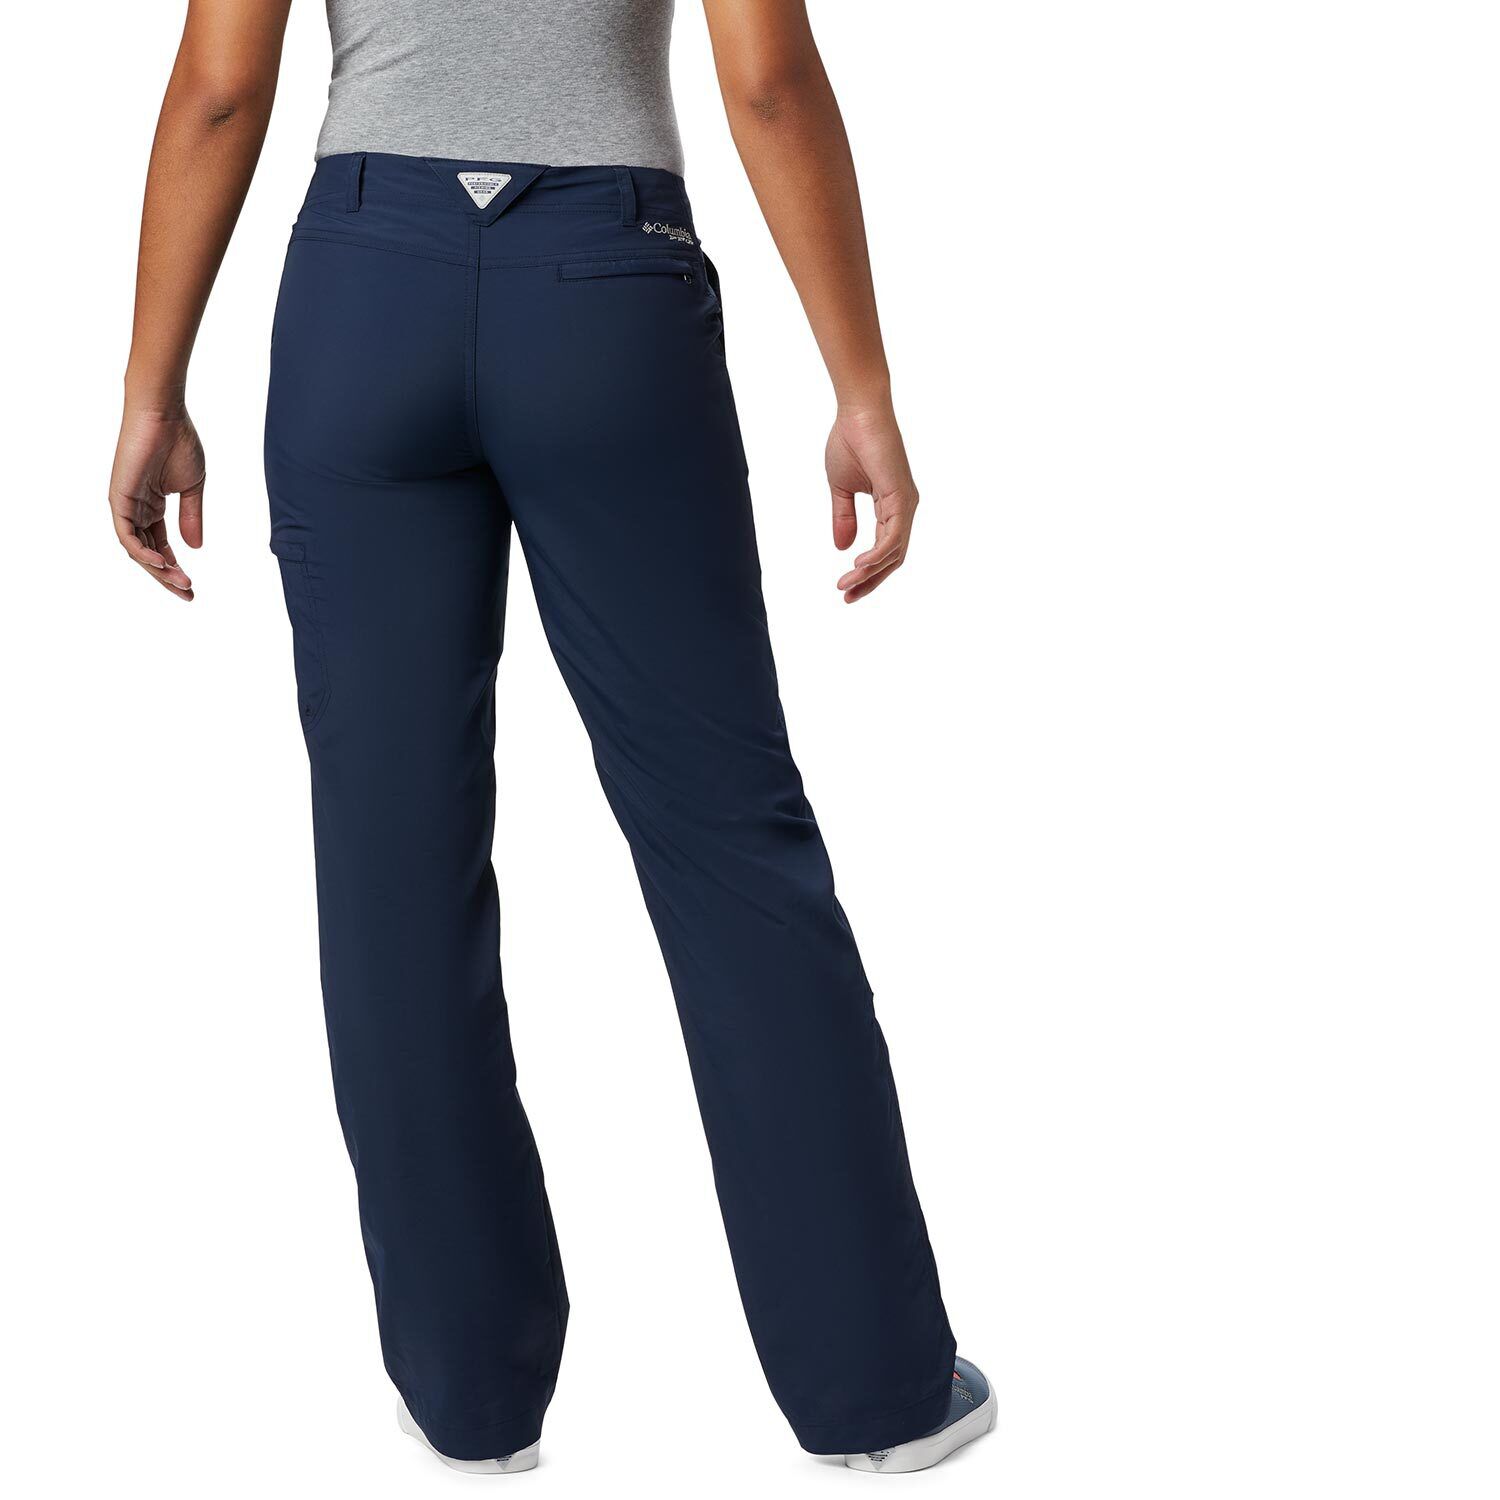 Columbia pants womens 16 short Omni-Shield Advanced Repellency zip 2856  grey | eBay